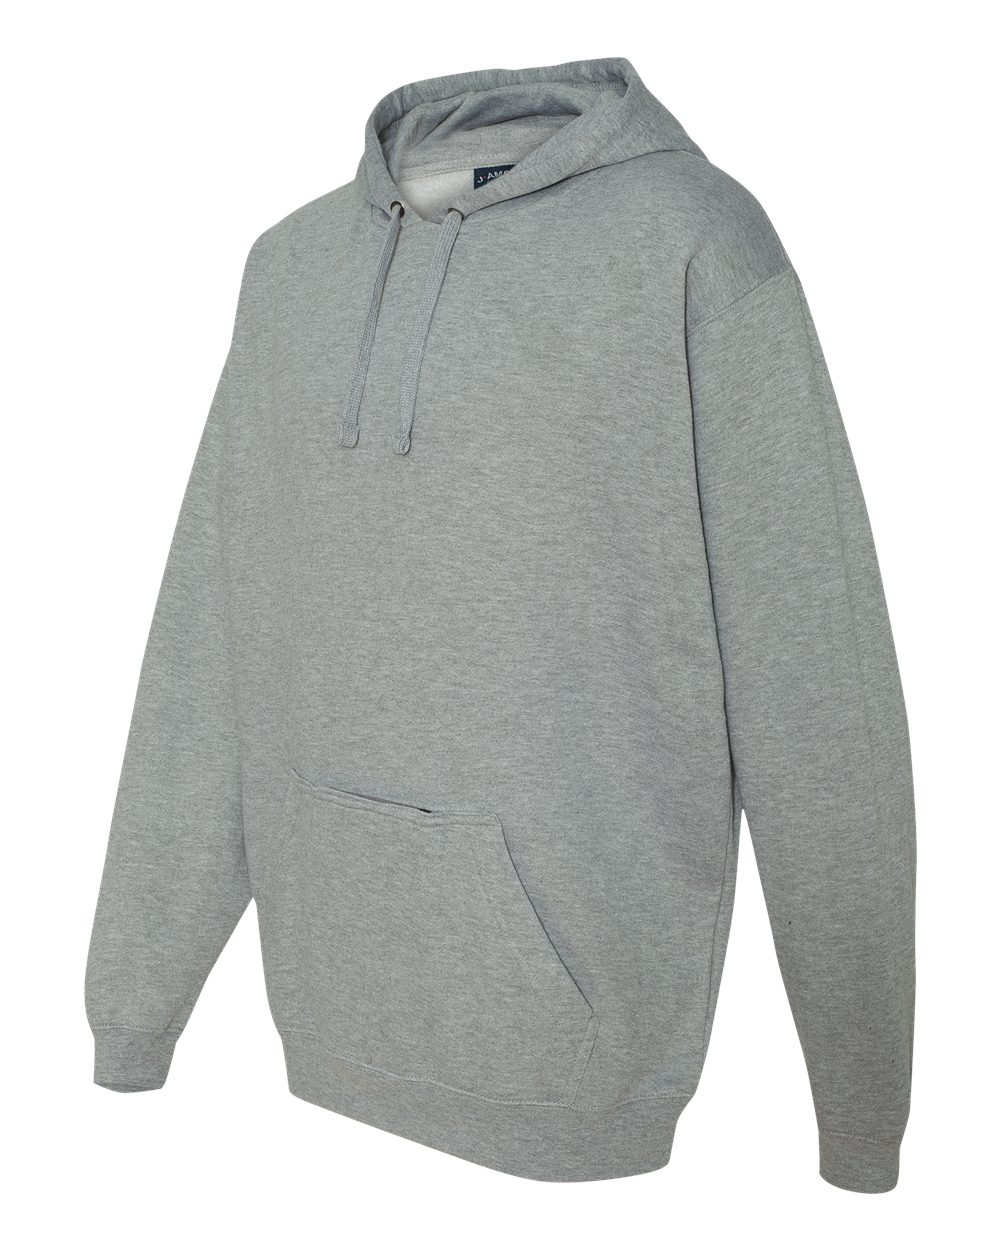 J. America Tailgate Hooded Sweatshirt - 8815 $26.95 - Sweatshirts